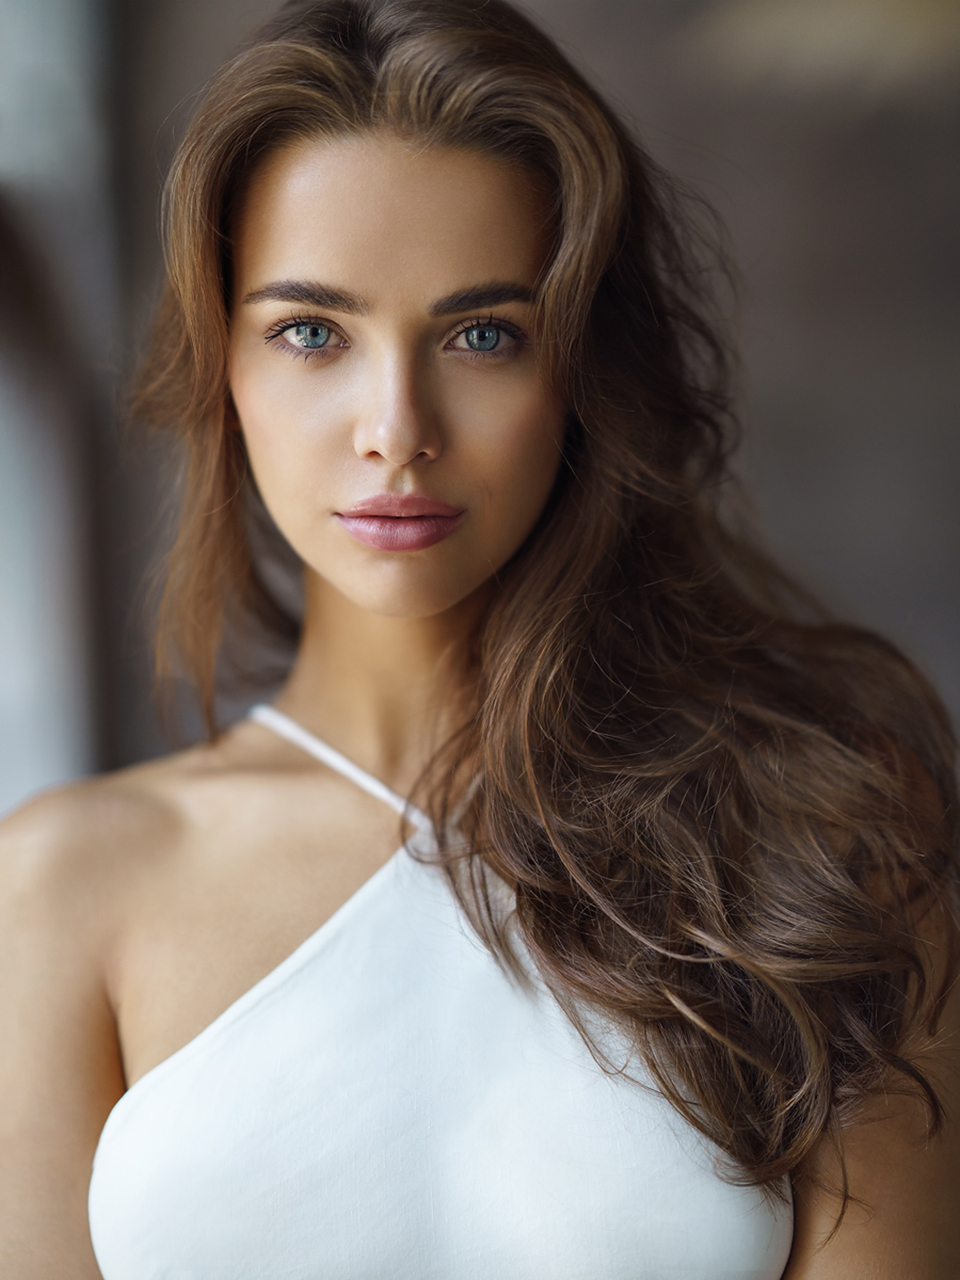 Alexey Kazantsev Women Brunette Long Hair Wavy Hair Looking At Viewer Blue Eyes White Clothing Depth 960x1280